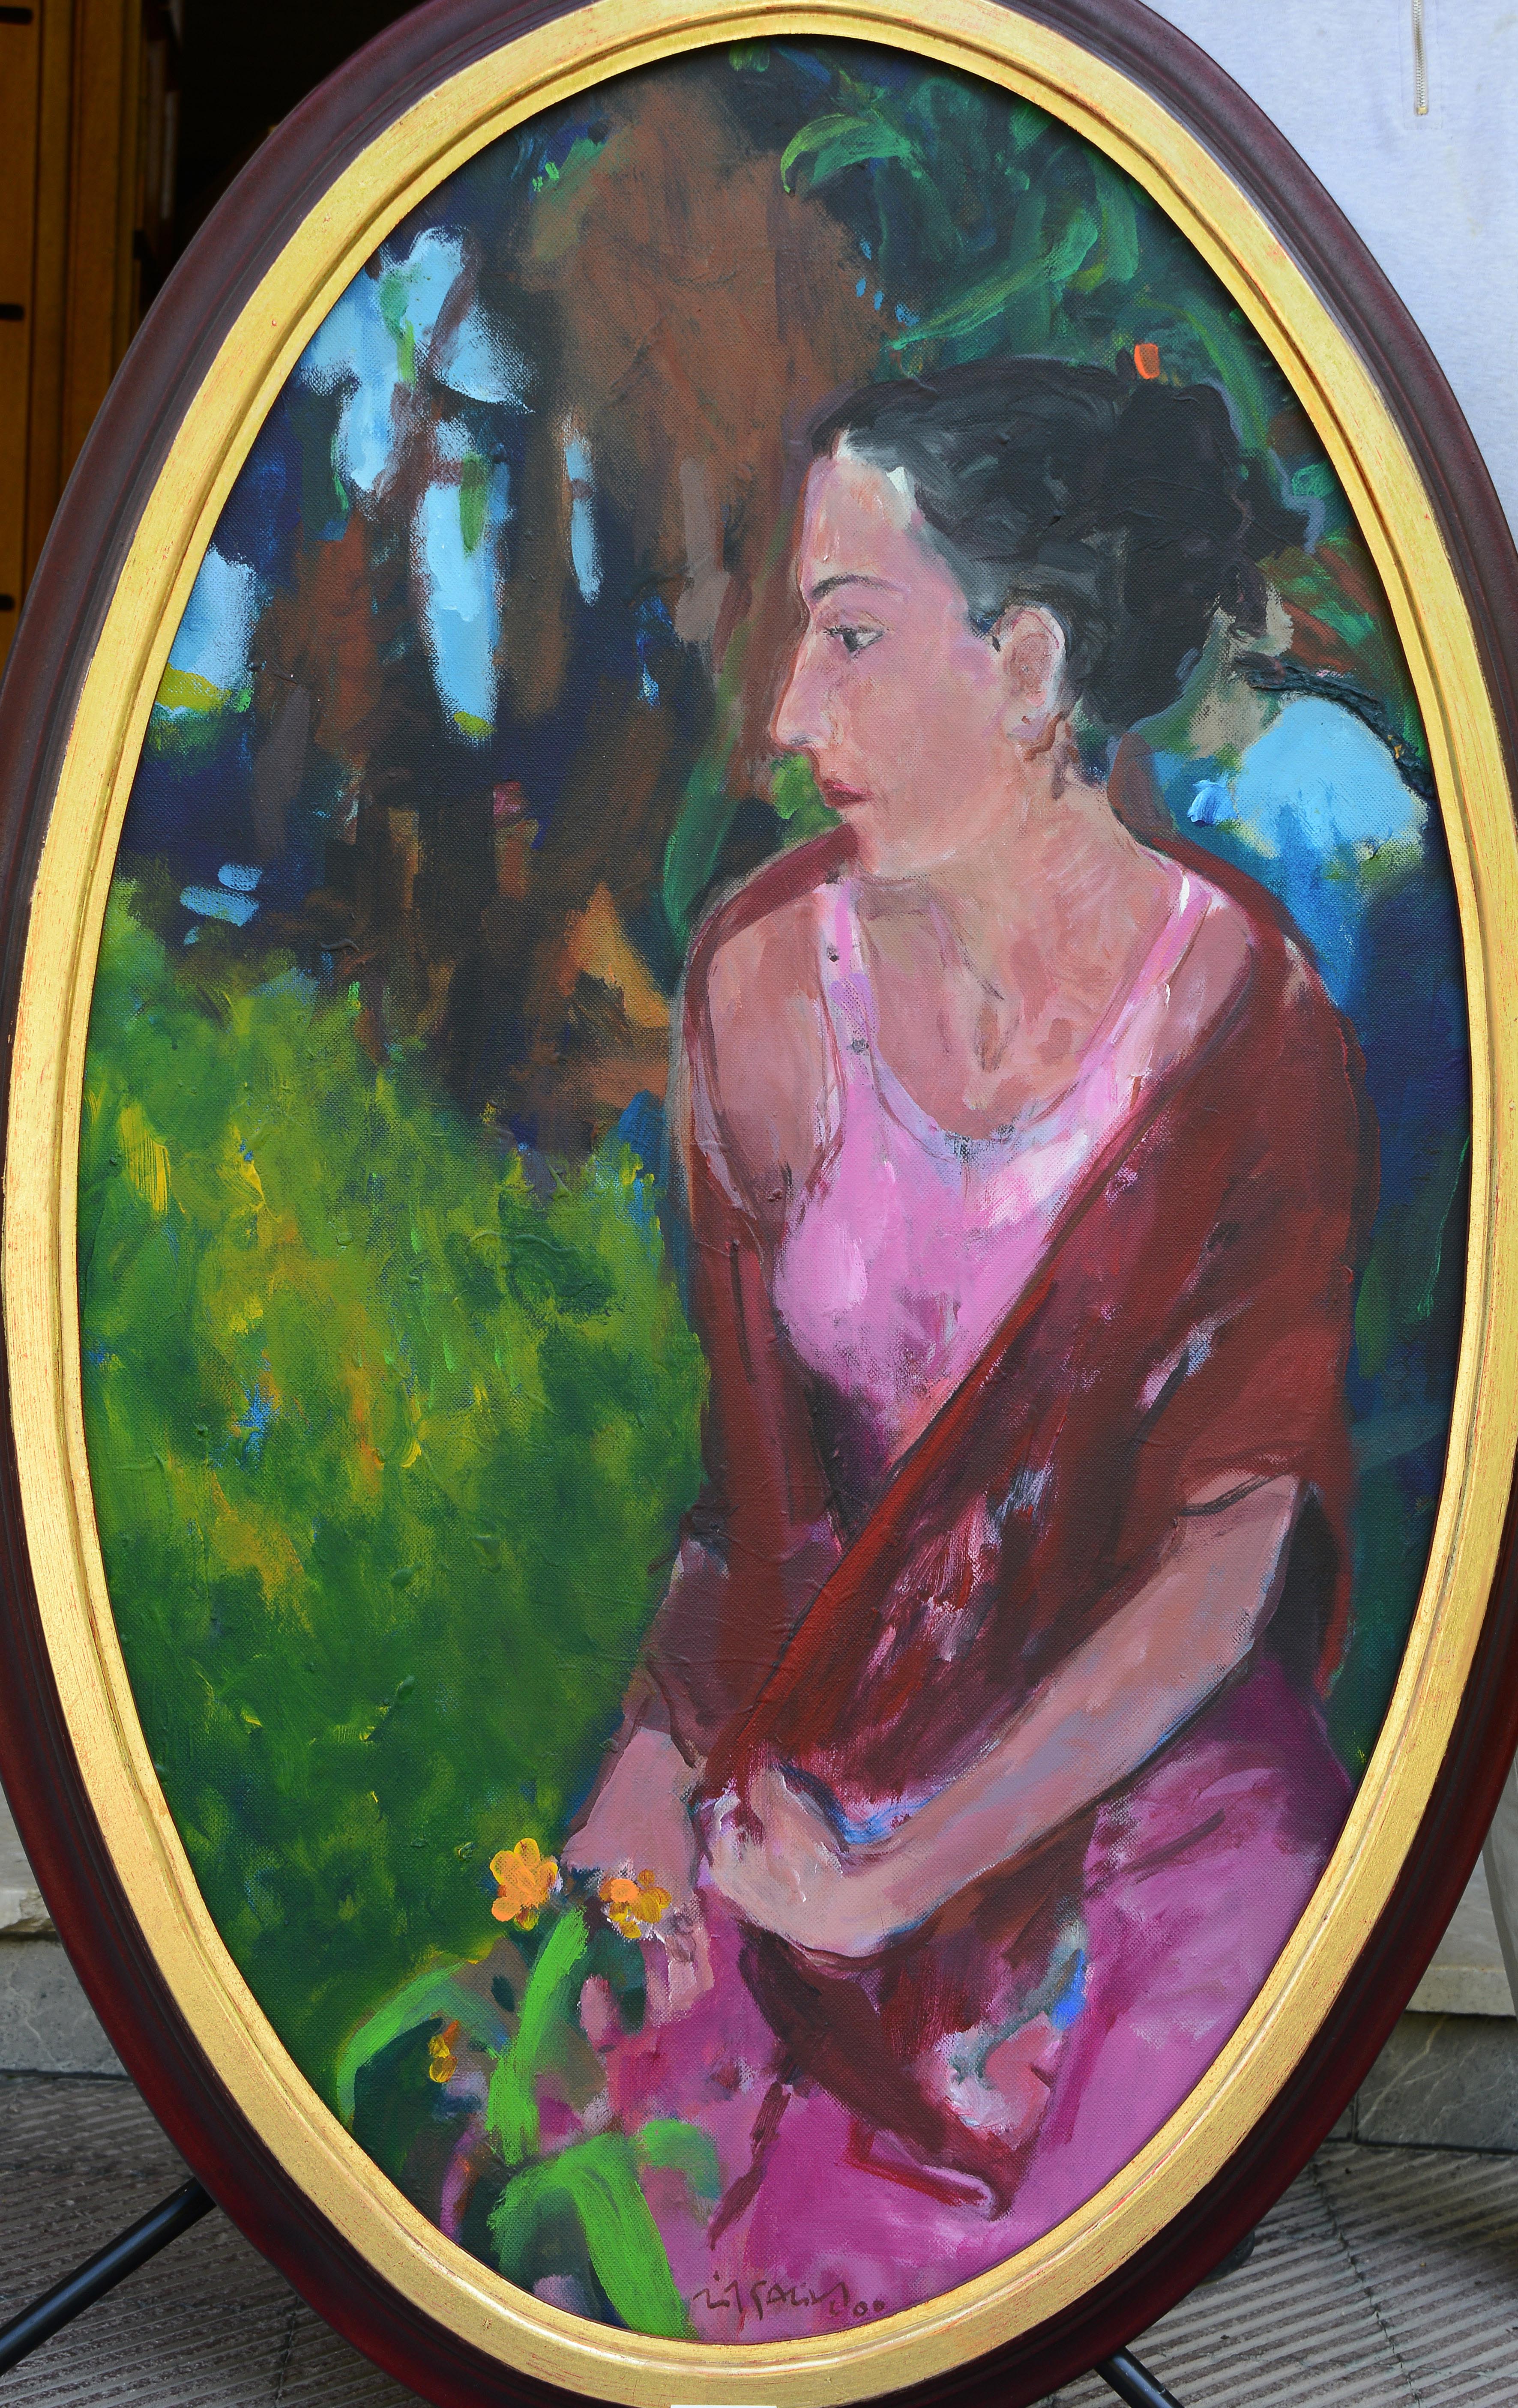 İsimsiz- Untitled, 2005, Tuval üzerine yağlıboya, Oil on canvas, 115x71 cm